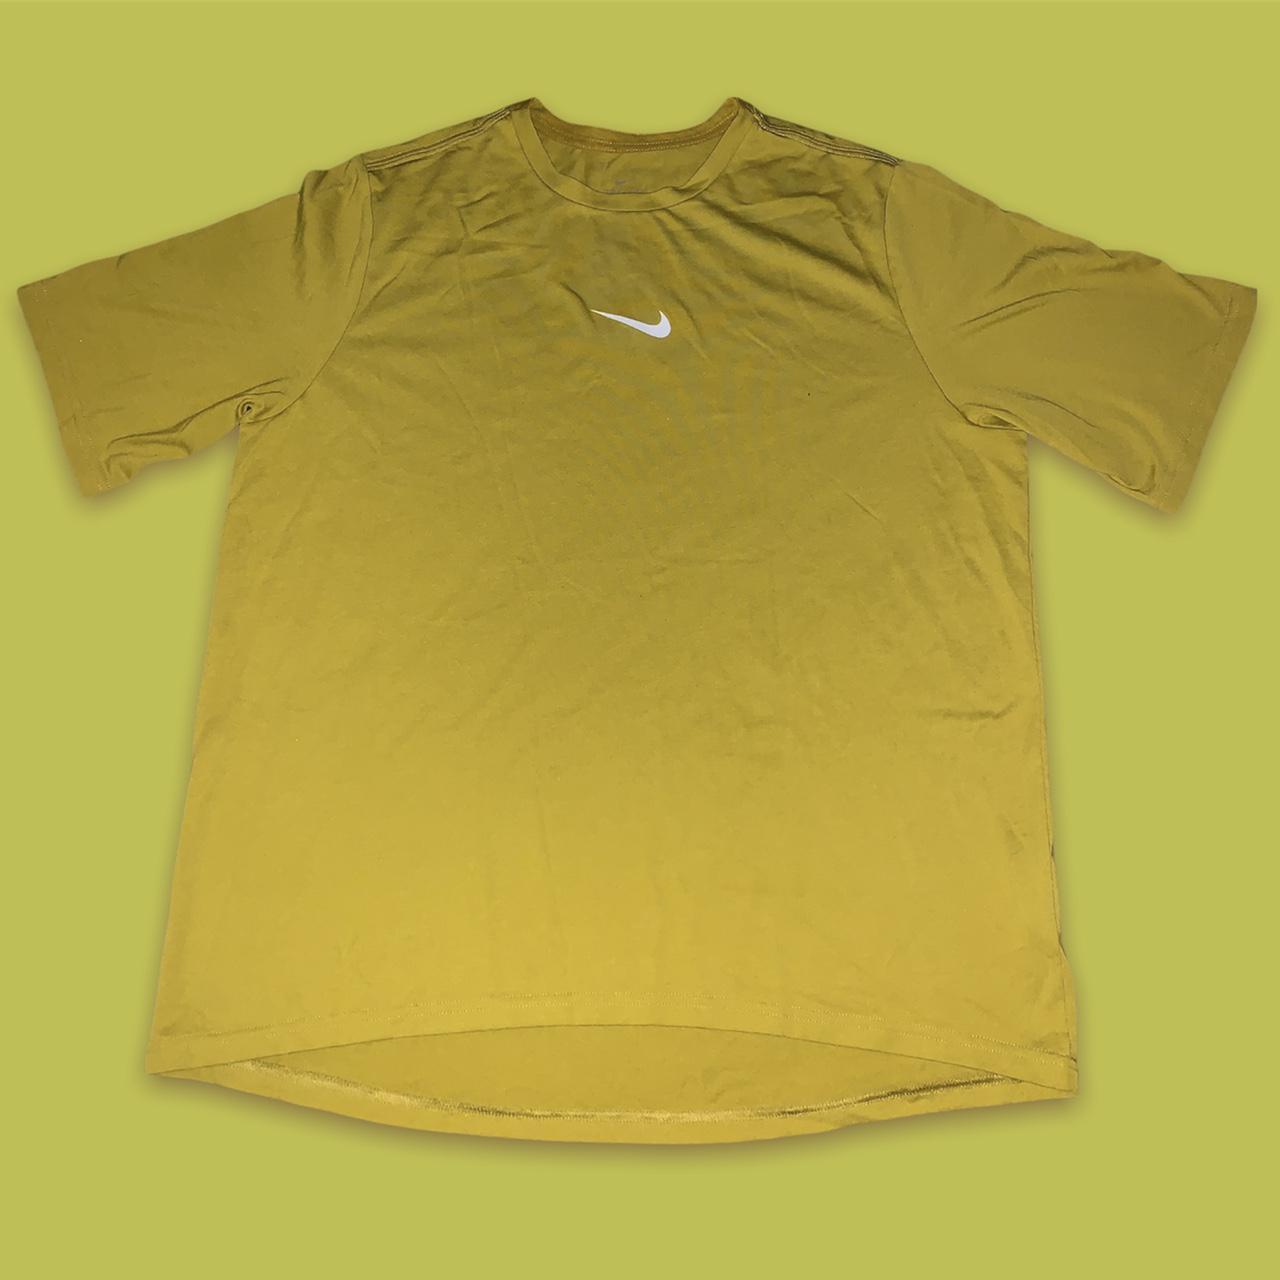 Nike Women's White and Gold T-shirt